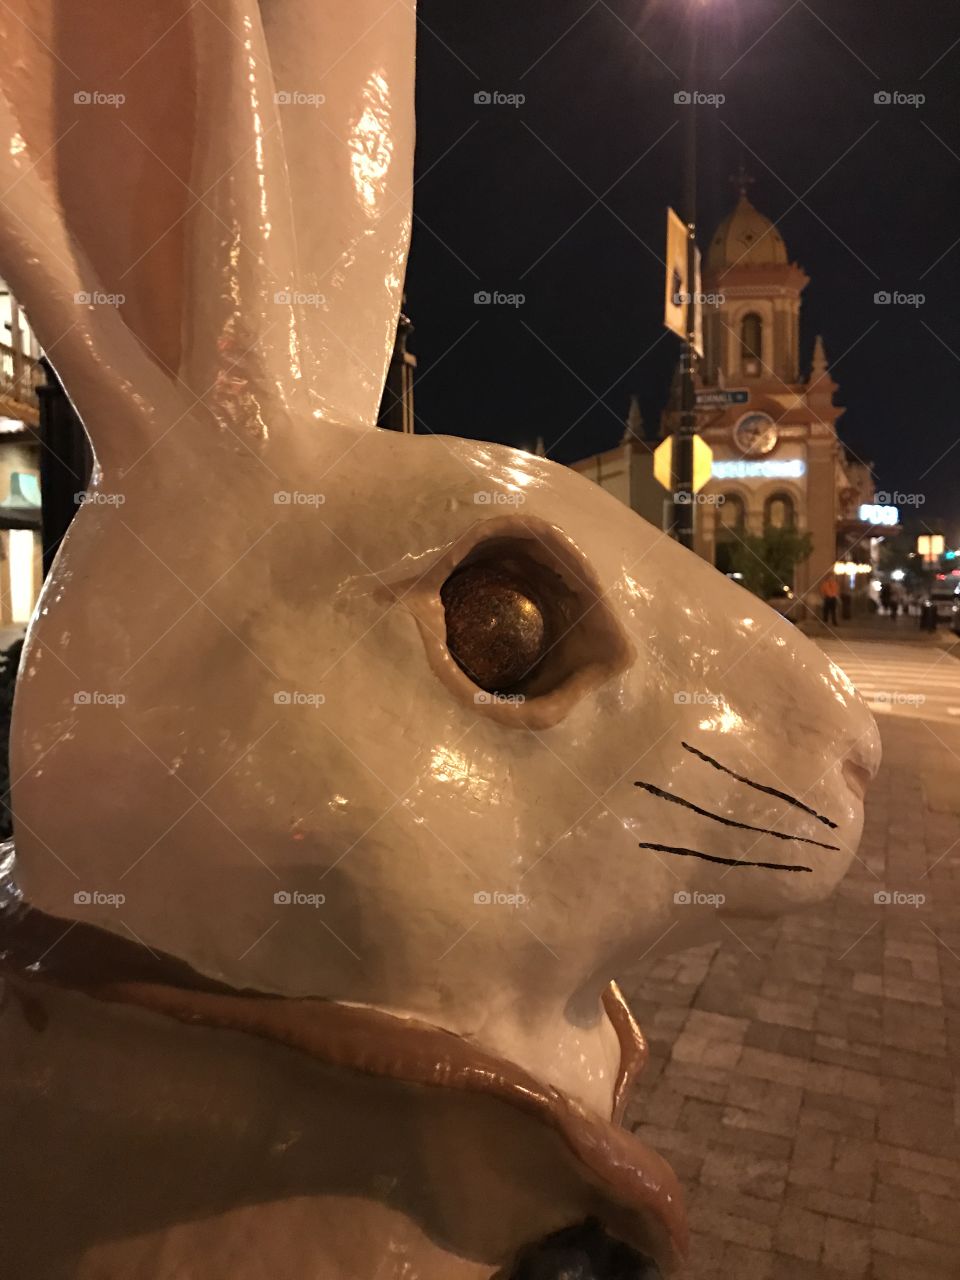 Creepy bunny statue